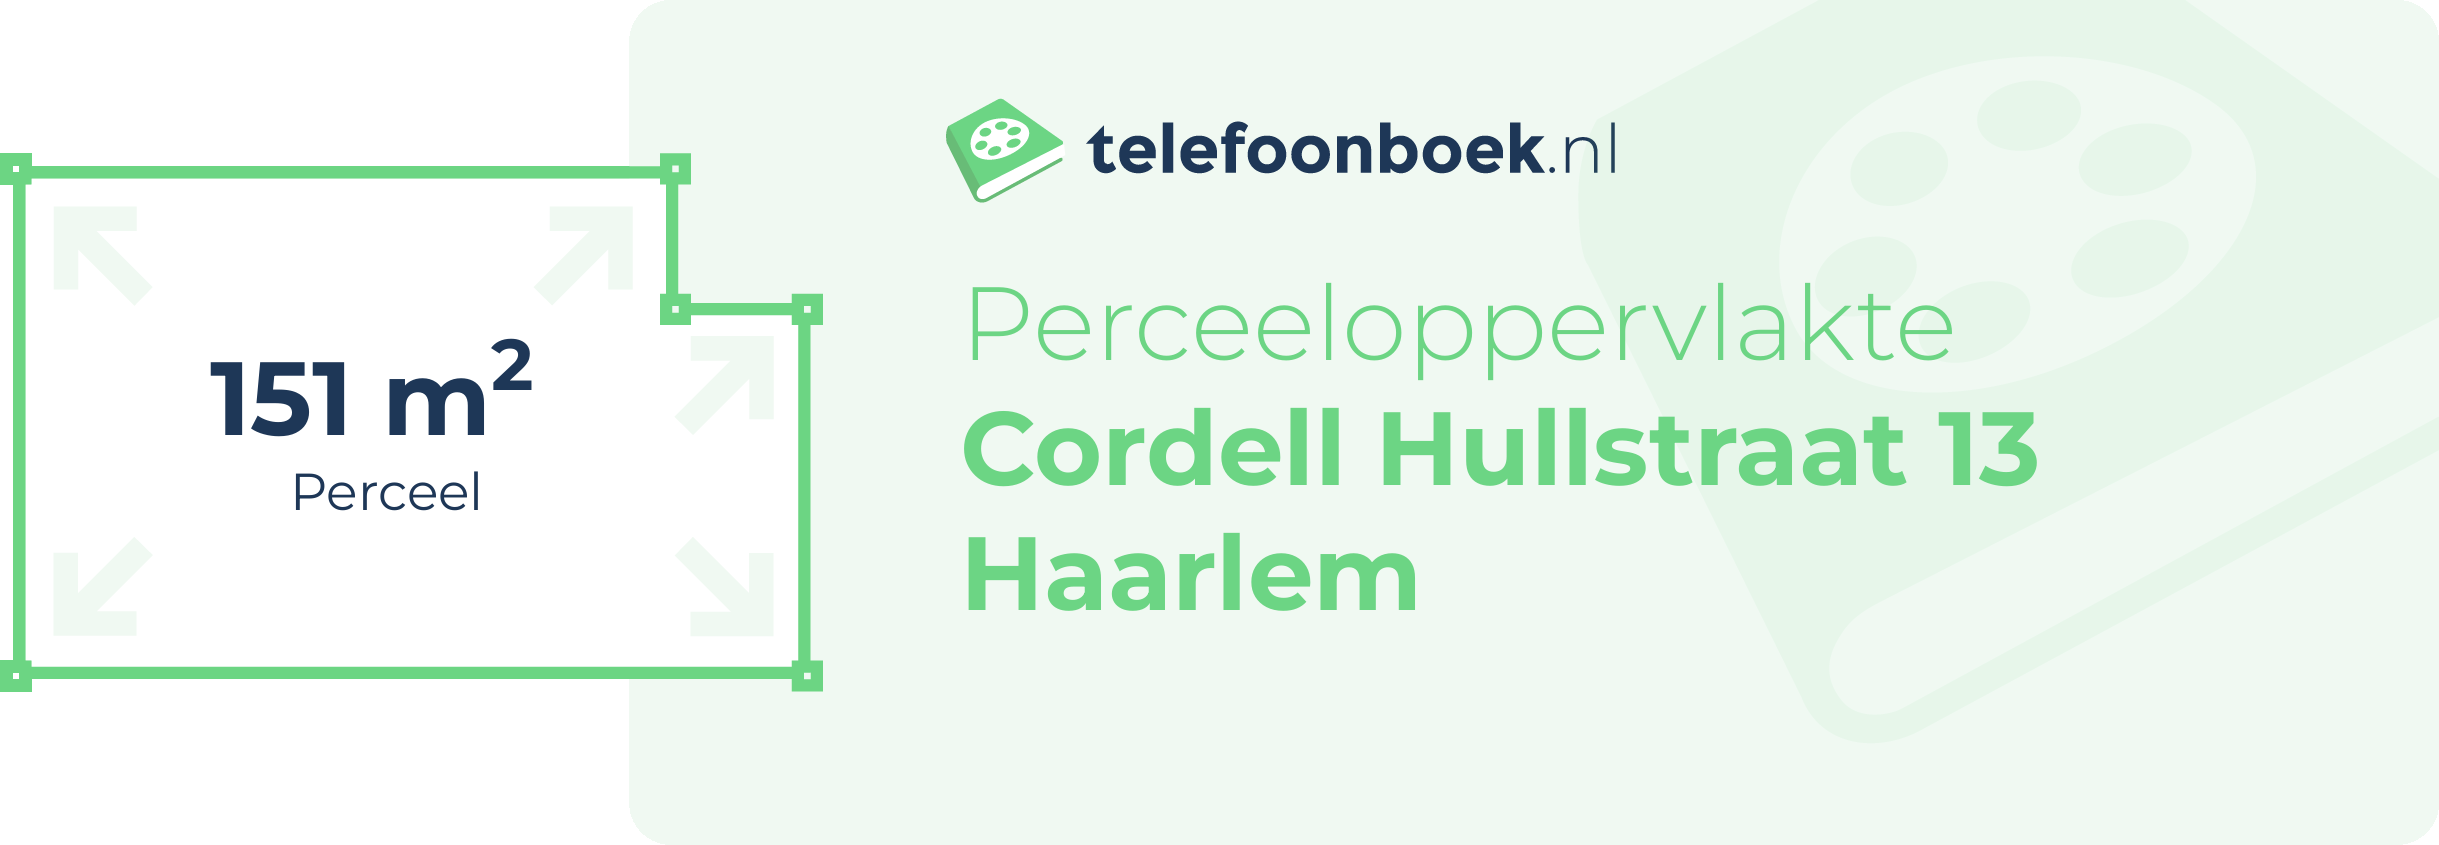 Perceeloppervlakte Cordell Hullstraat 13 Haarlem